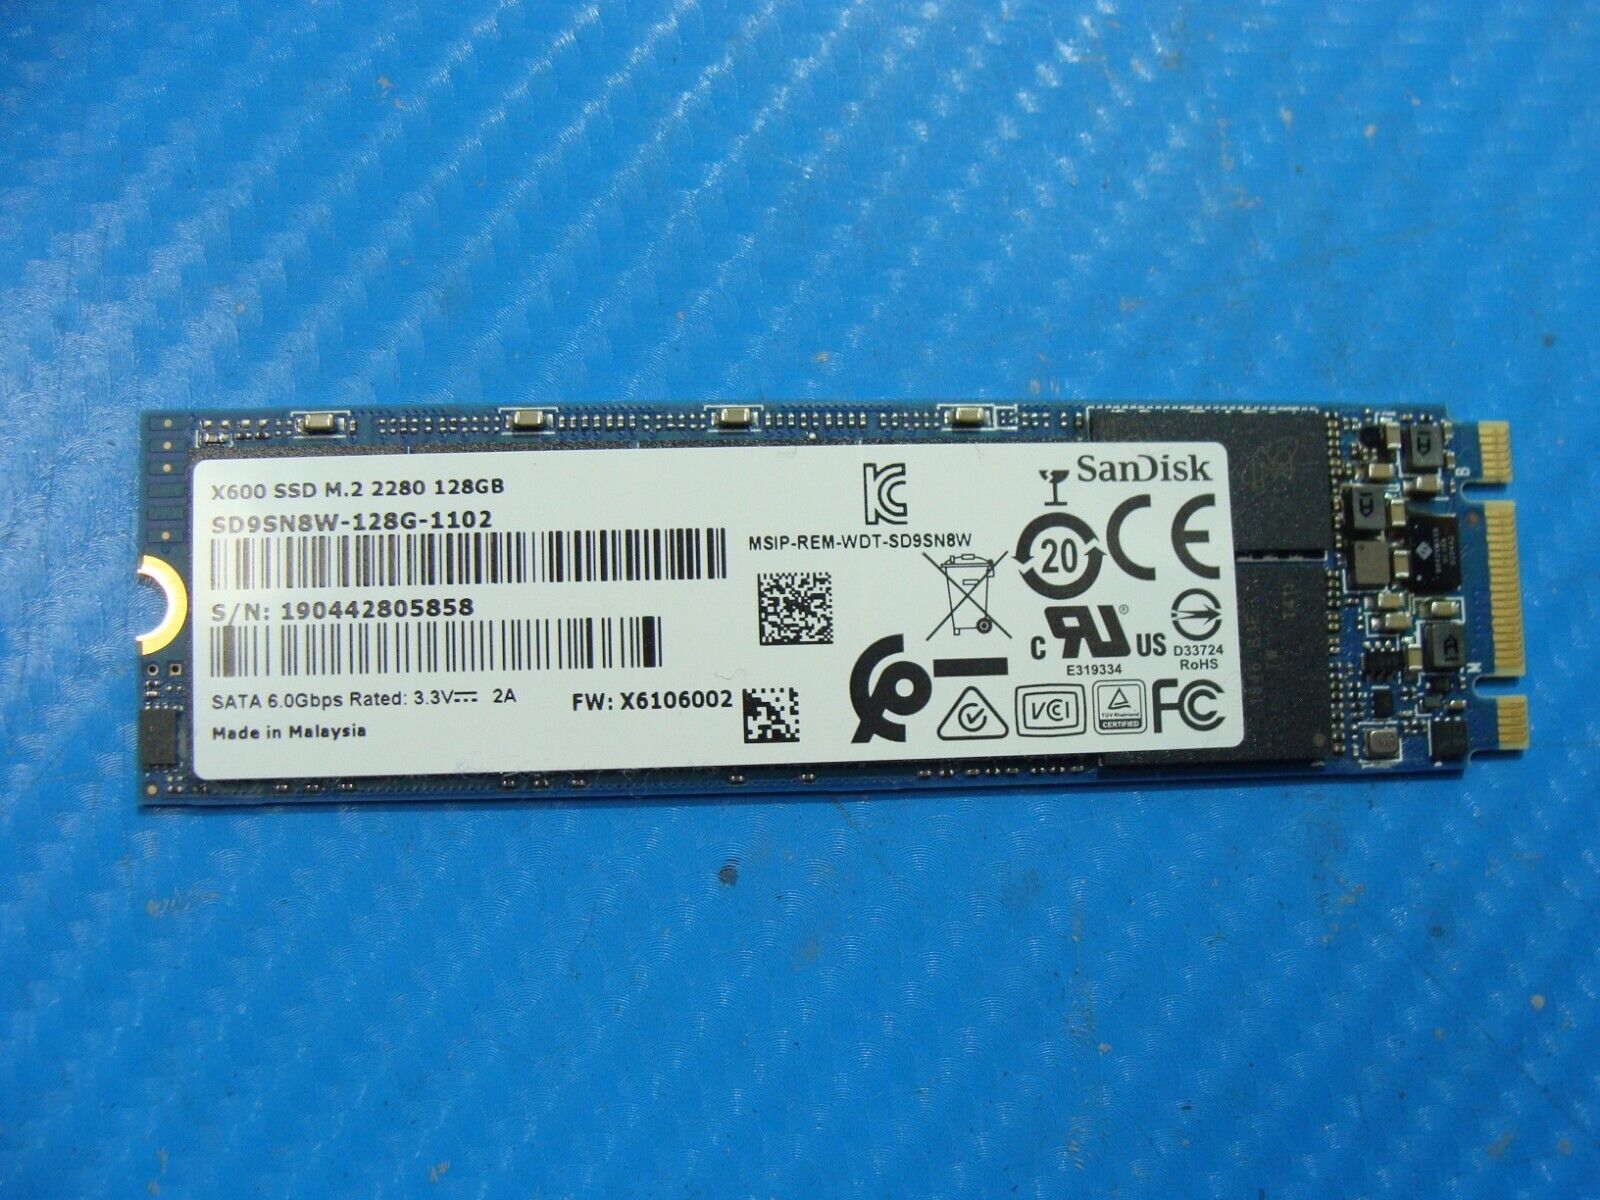 Asus X512DA SanDisk 128GB SATA M.2 SSD Solid State Drive SD9SN8W-128G-1102